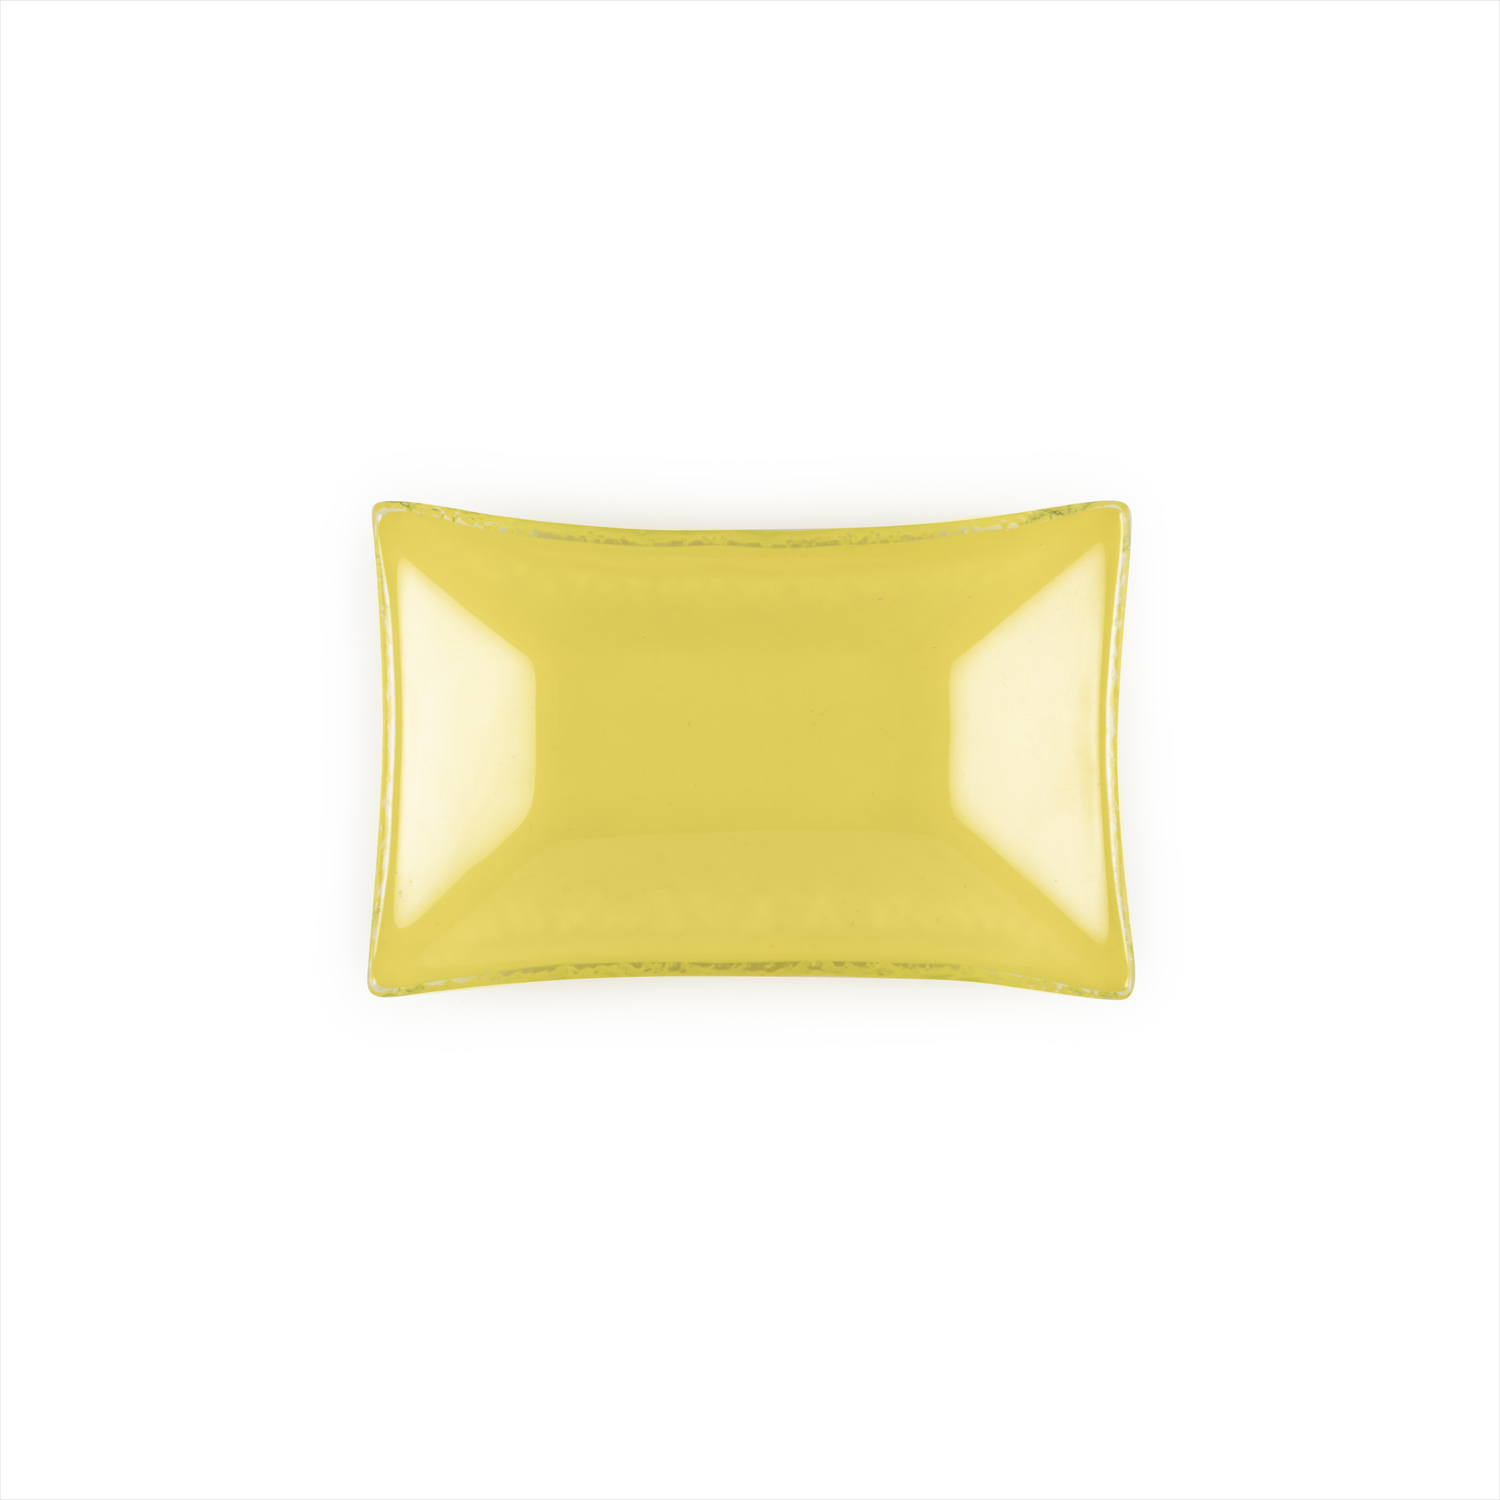 Fusion Glass Ramekin Yellow Rectangular 4.25″ x 2.5″ x 0.5″  1 oz. CasePack:24